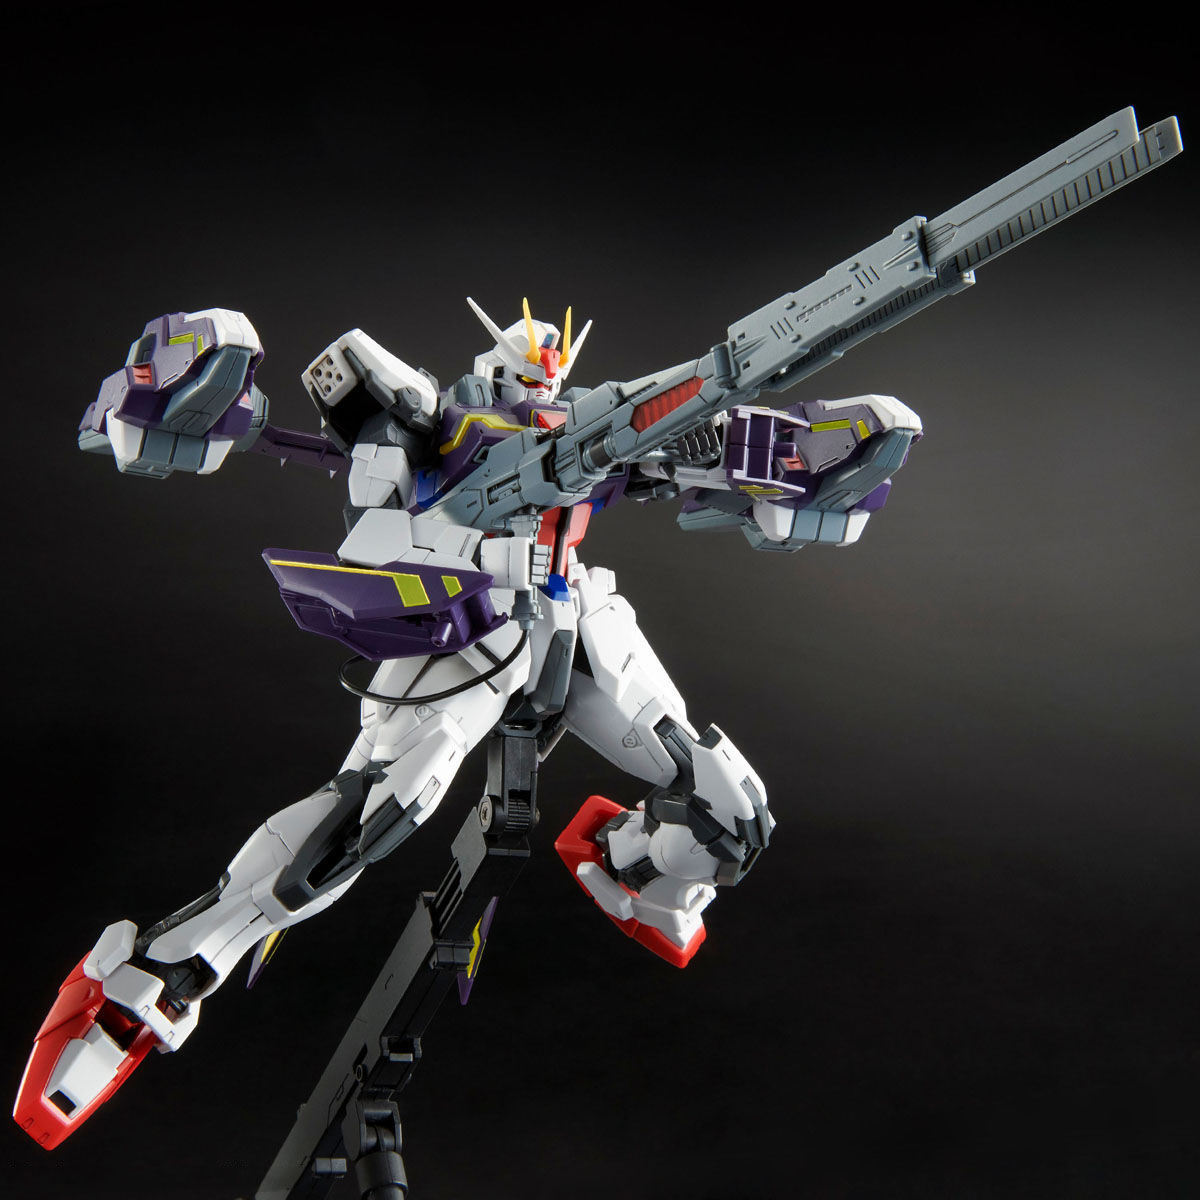 RM 1/100 Scale Action Figure Model Kit Bandai Hobby MG Aile Strike Gundam Ver